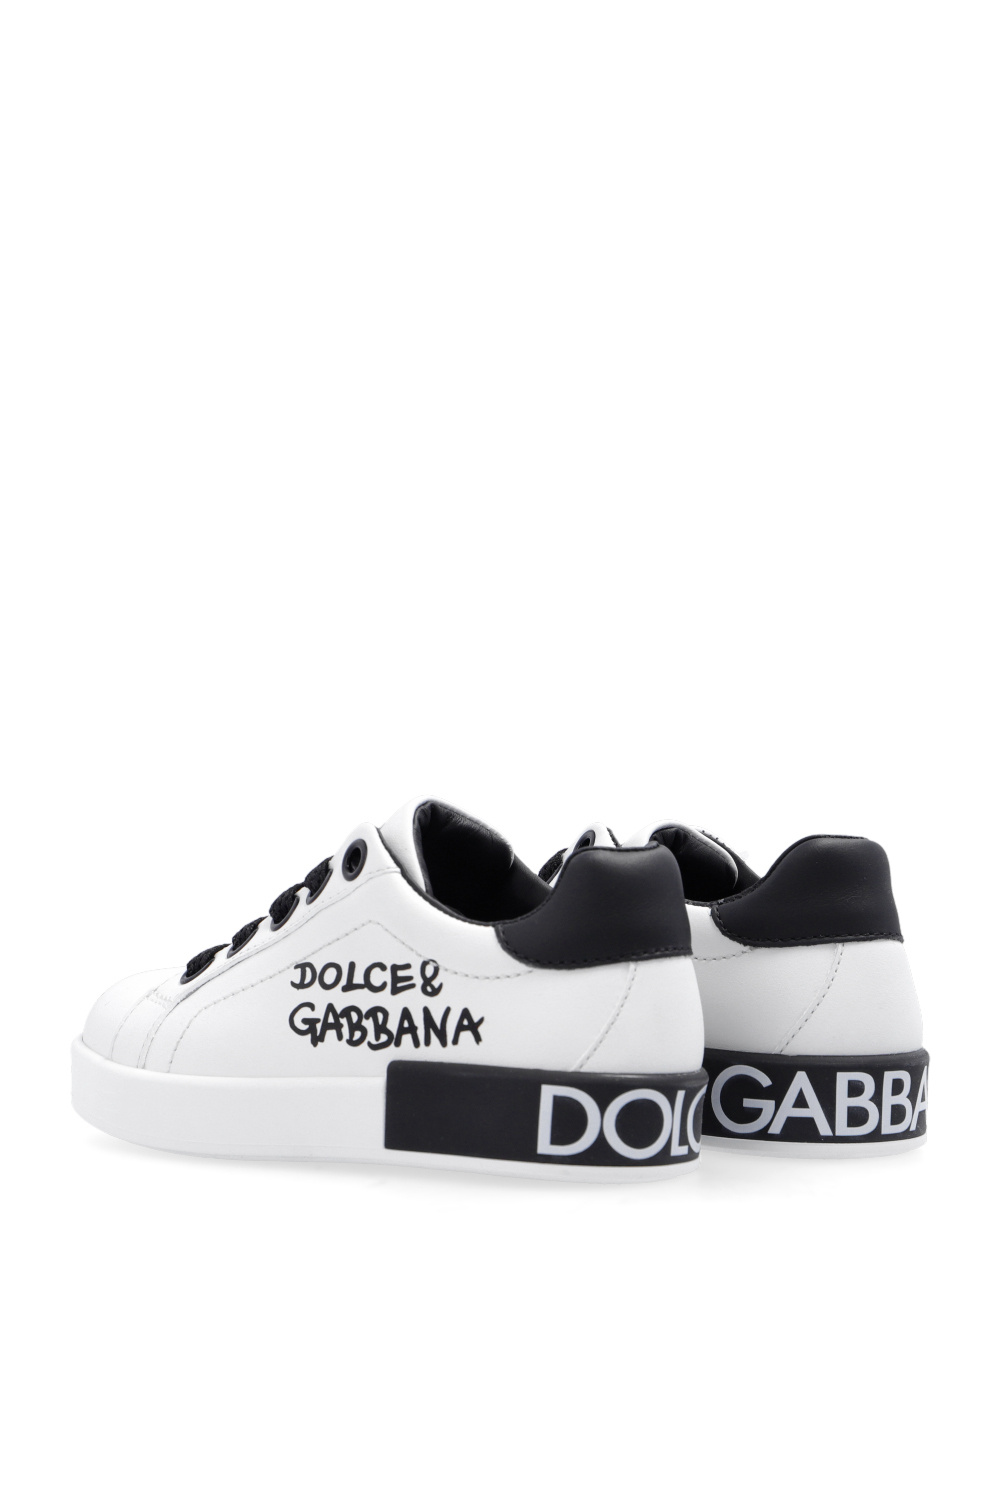 Dolce & Gabbana logo heel open-toe sandals ‘Portofino’ sneakers